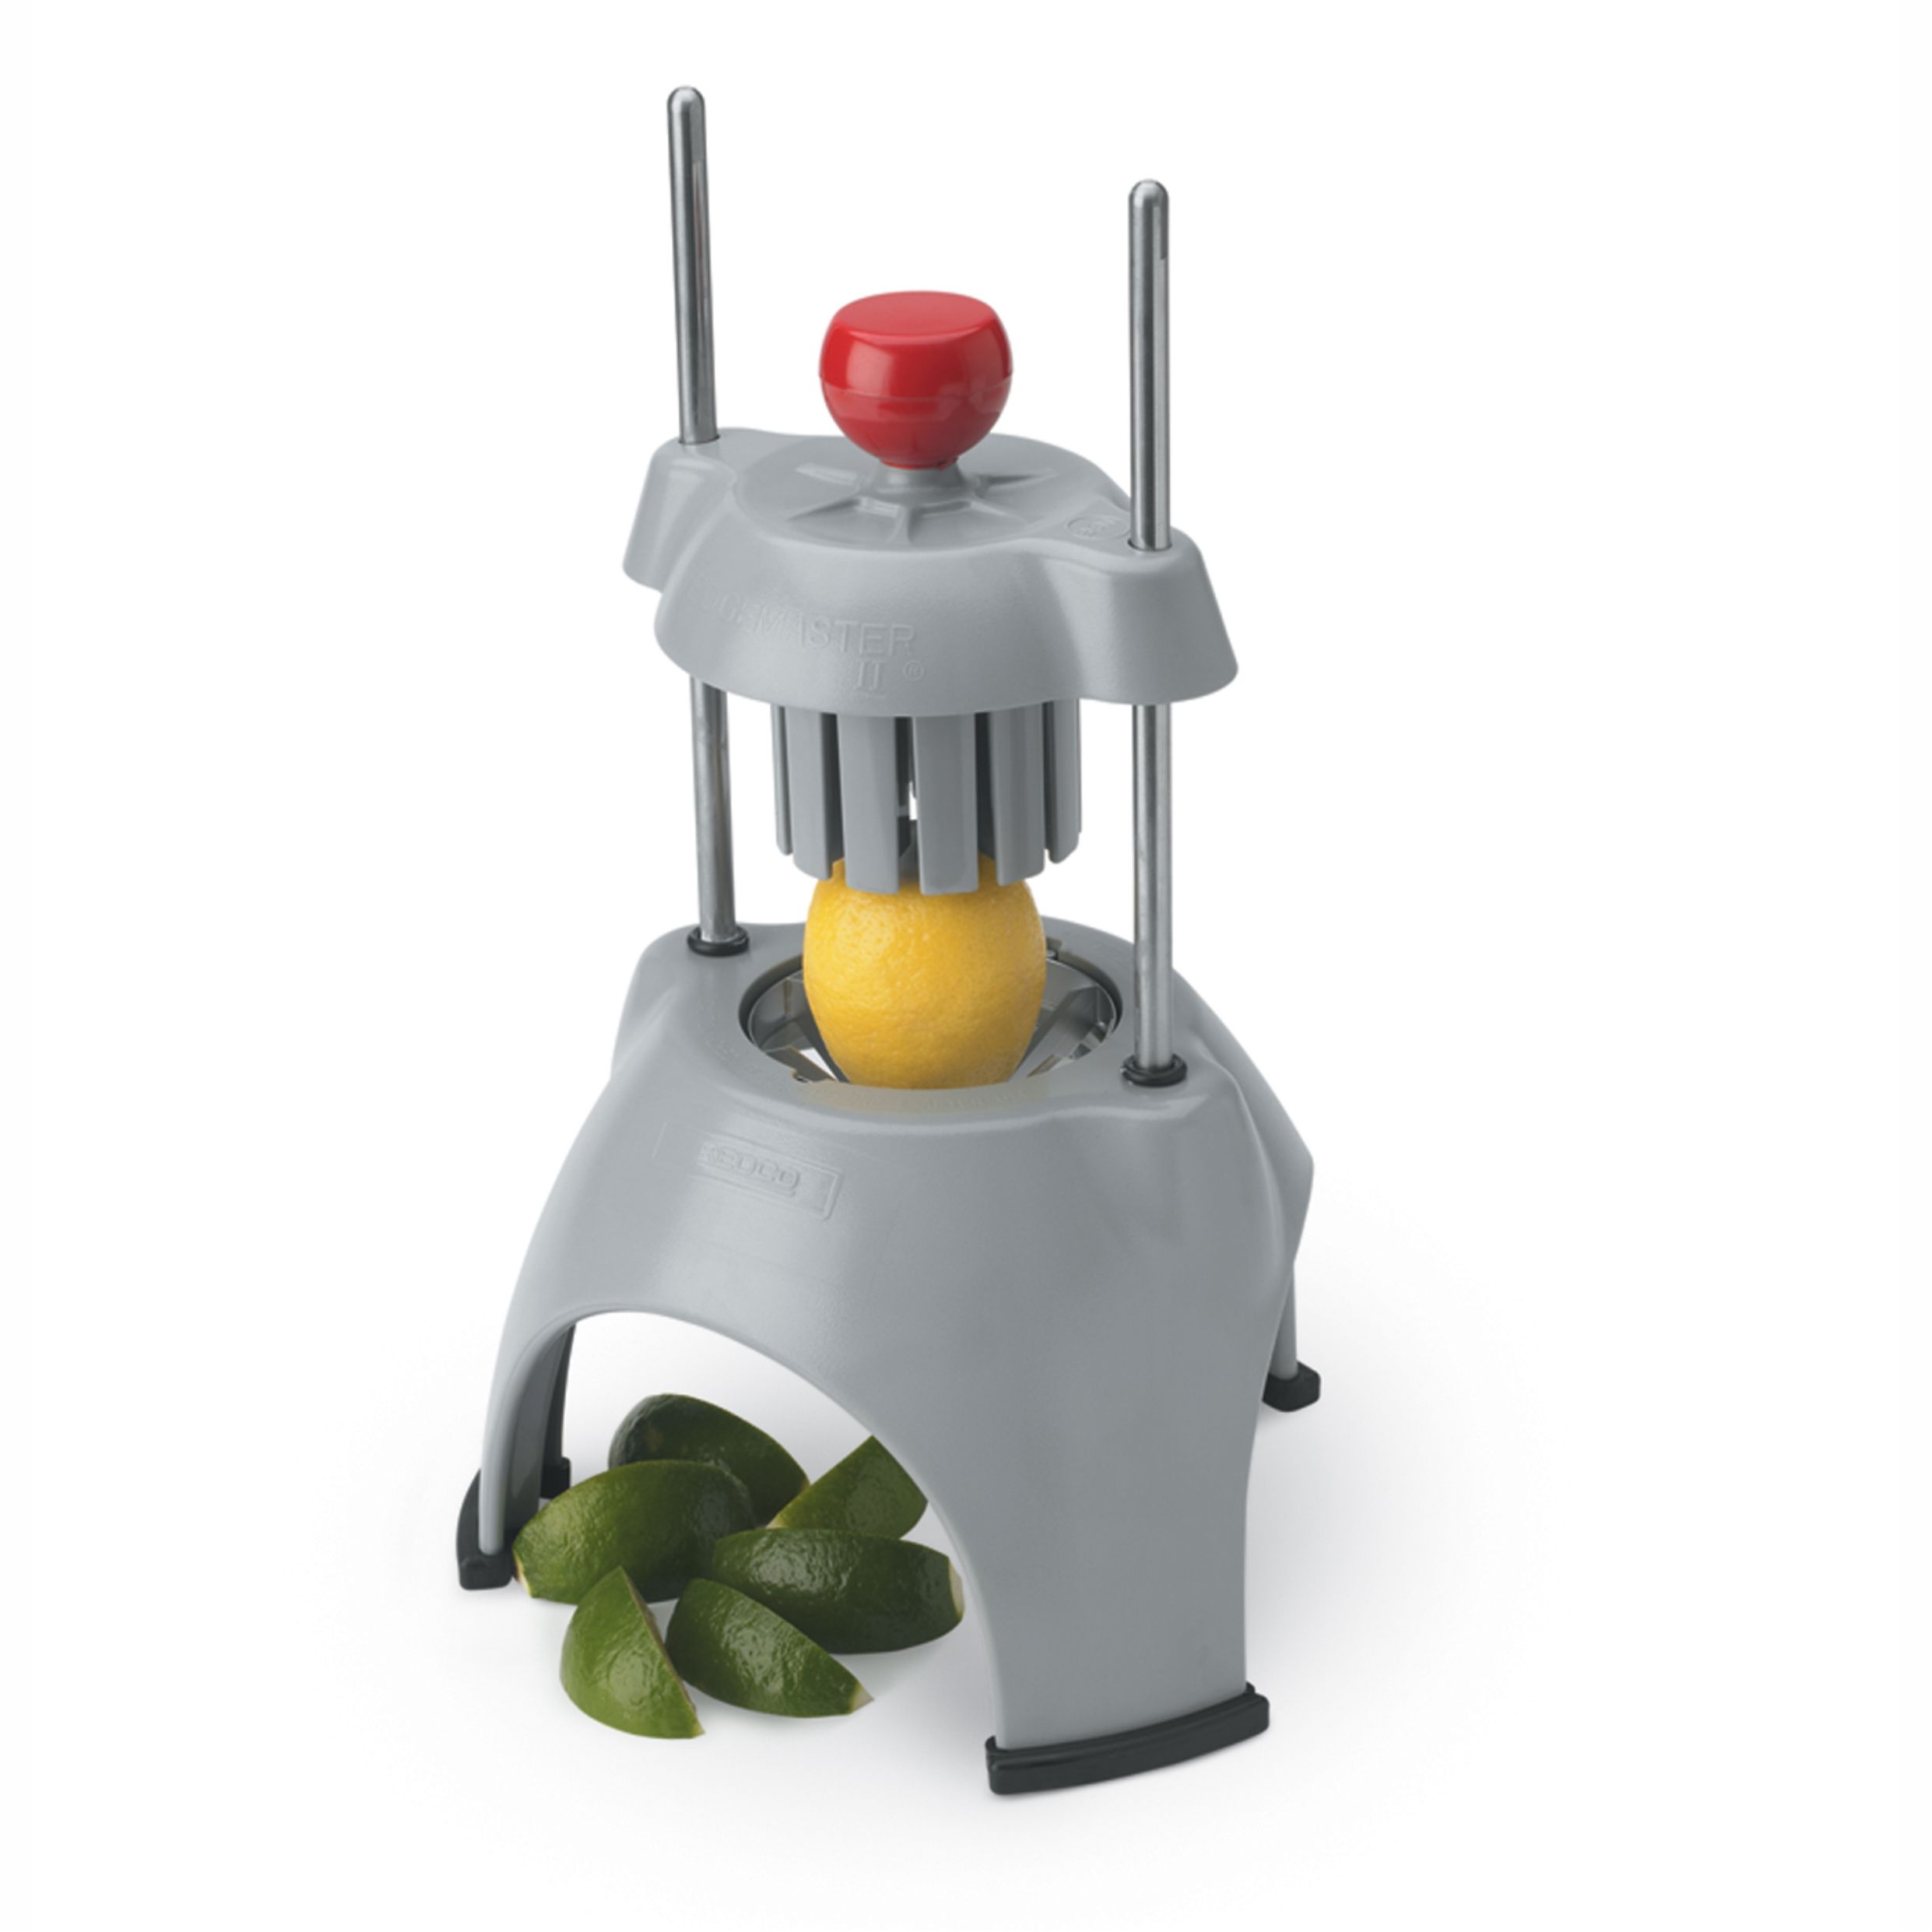 Taglia patate e frutta a spicchi - mod. TPA700